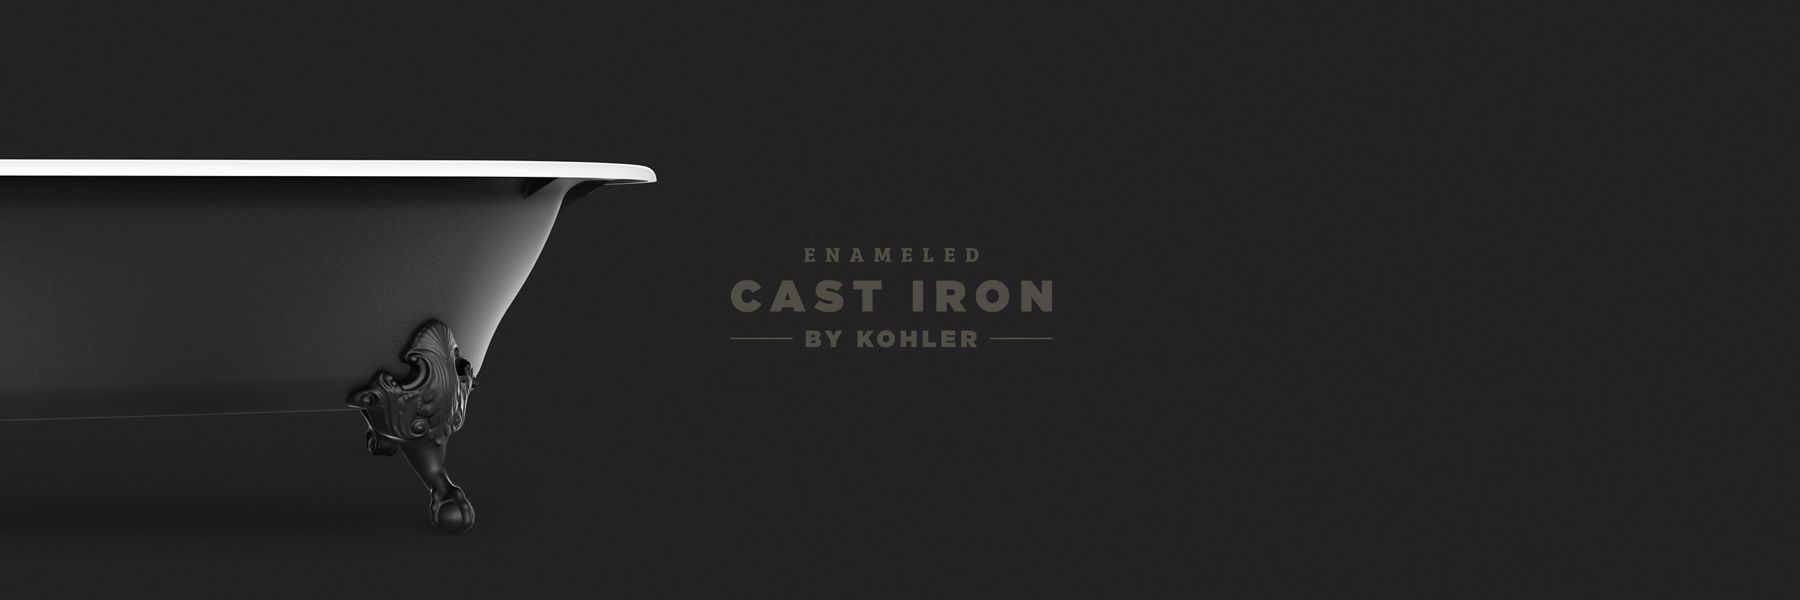 Kohler Cast Iron